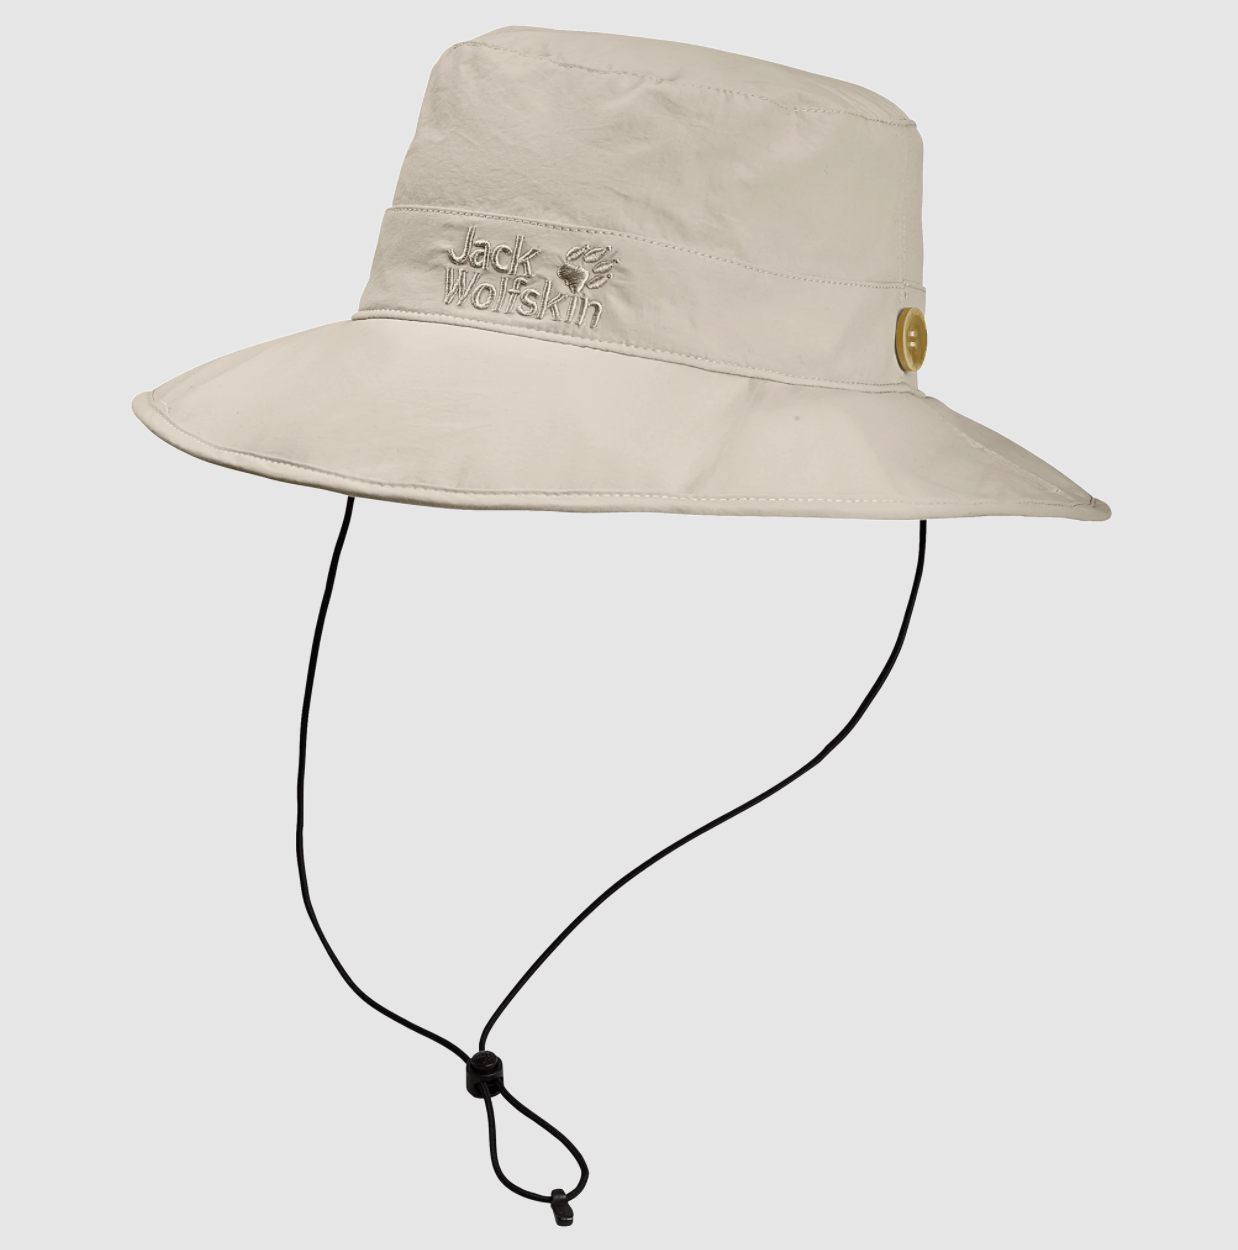 Jack Wolfskin Supplex Mesh Sun Hat - ScoutTech